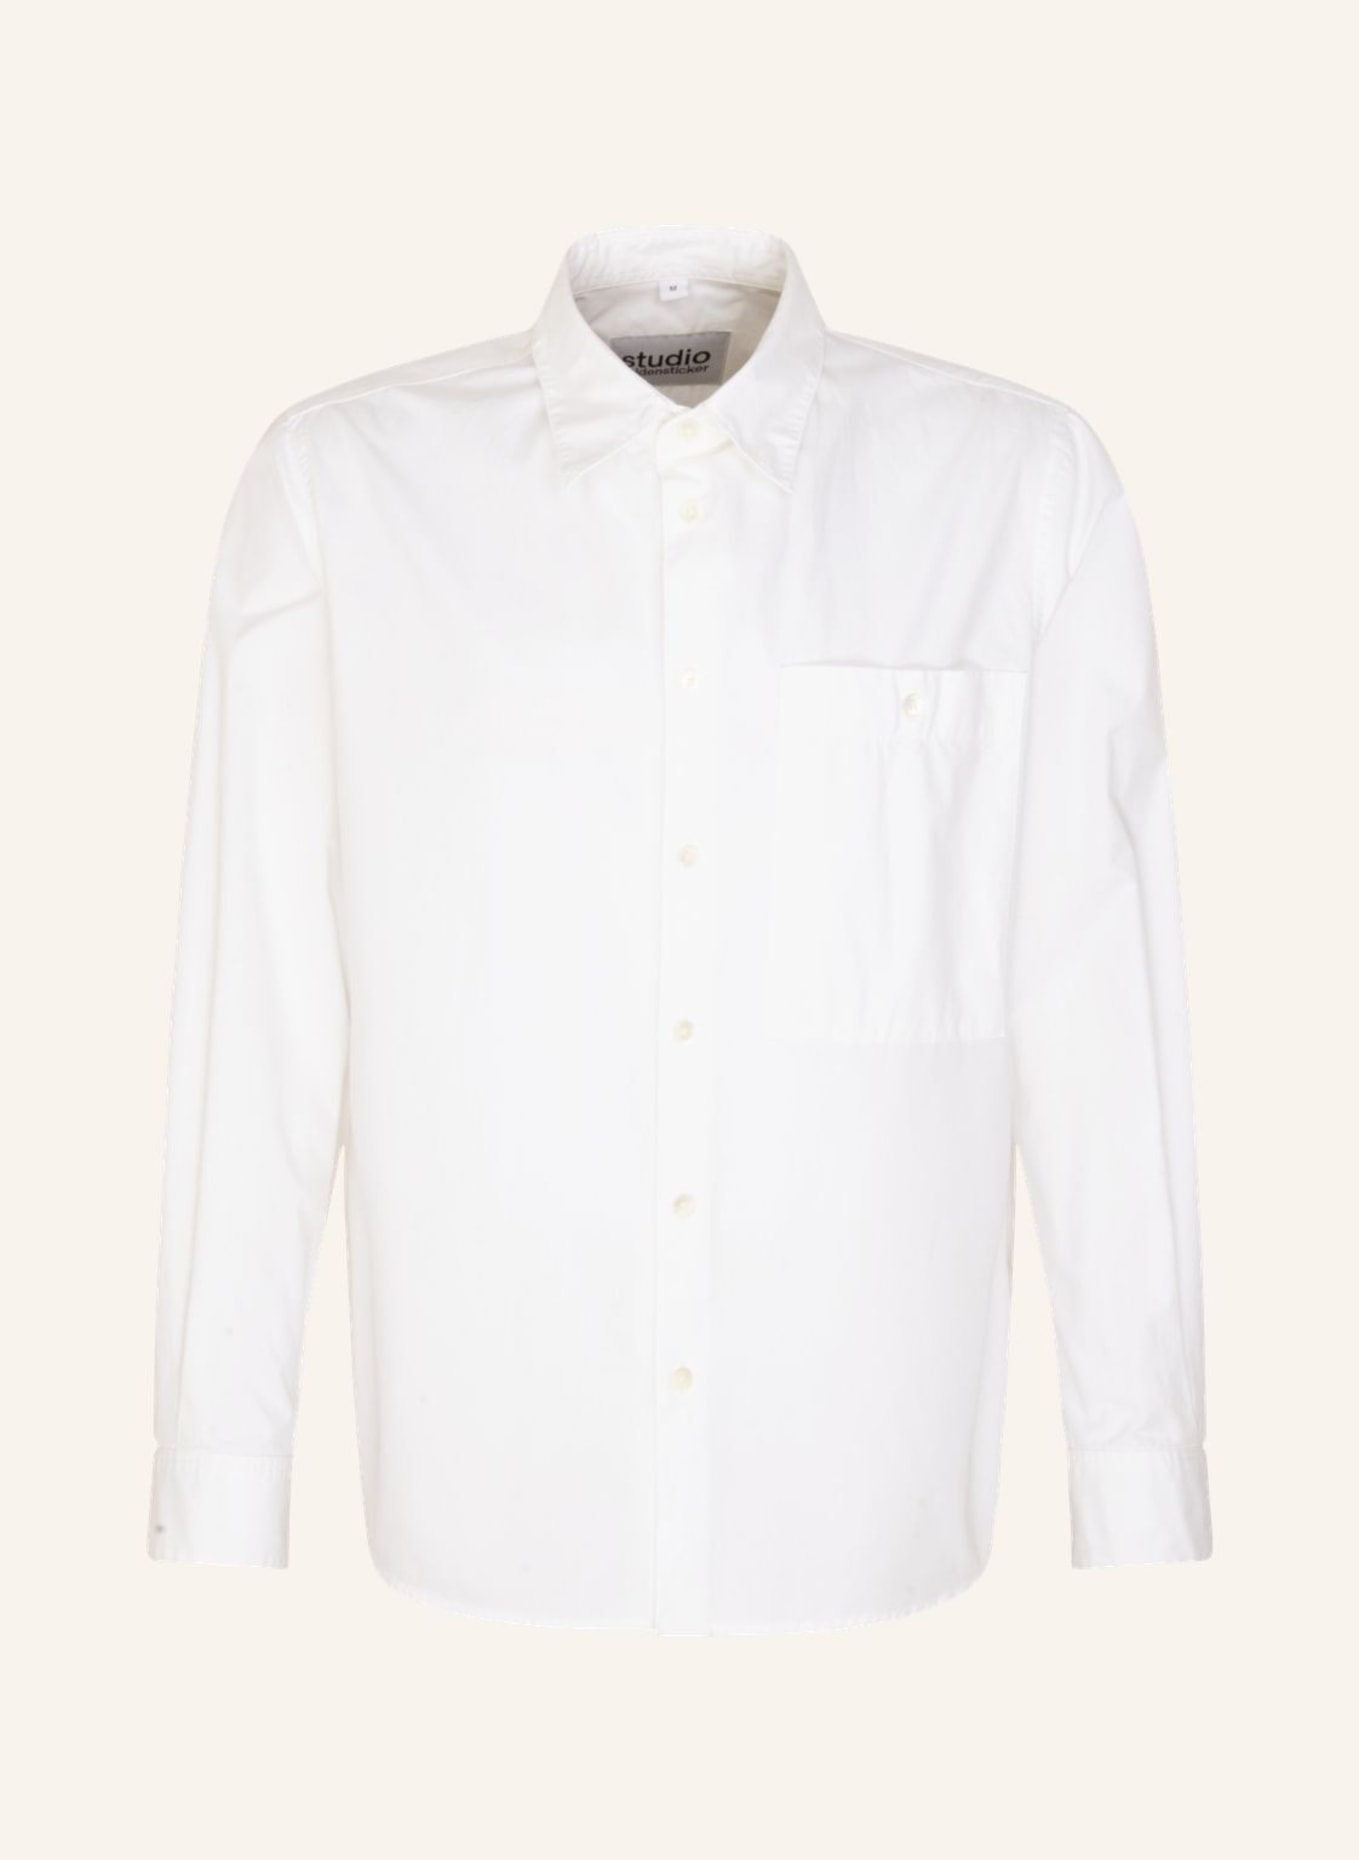 studio seidensticker Casual Hemd, Hemd Regular Fit, Farbe: WEISS (Bild 1)